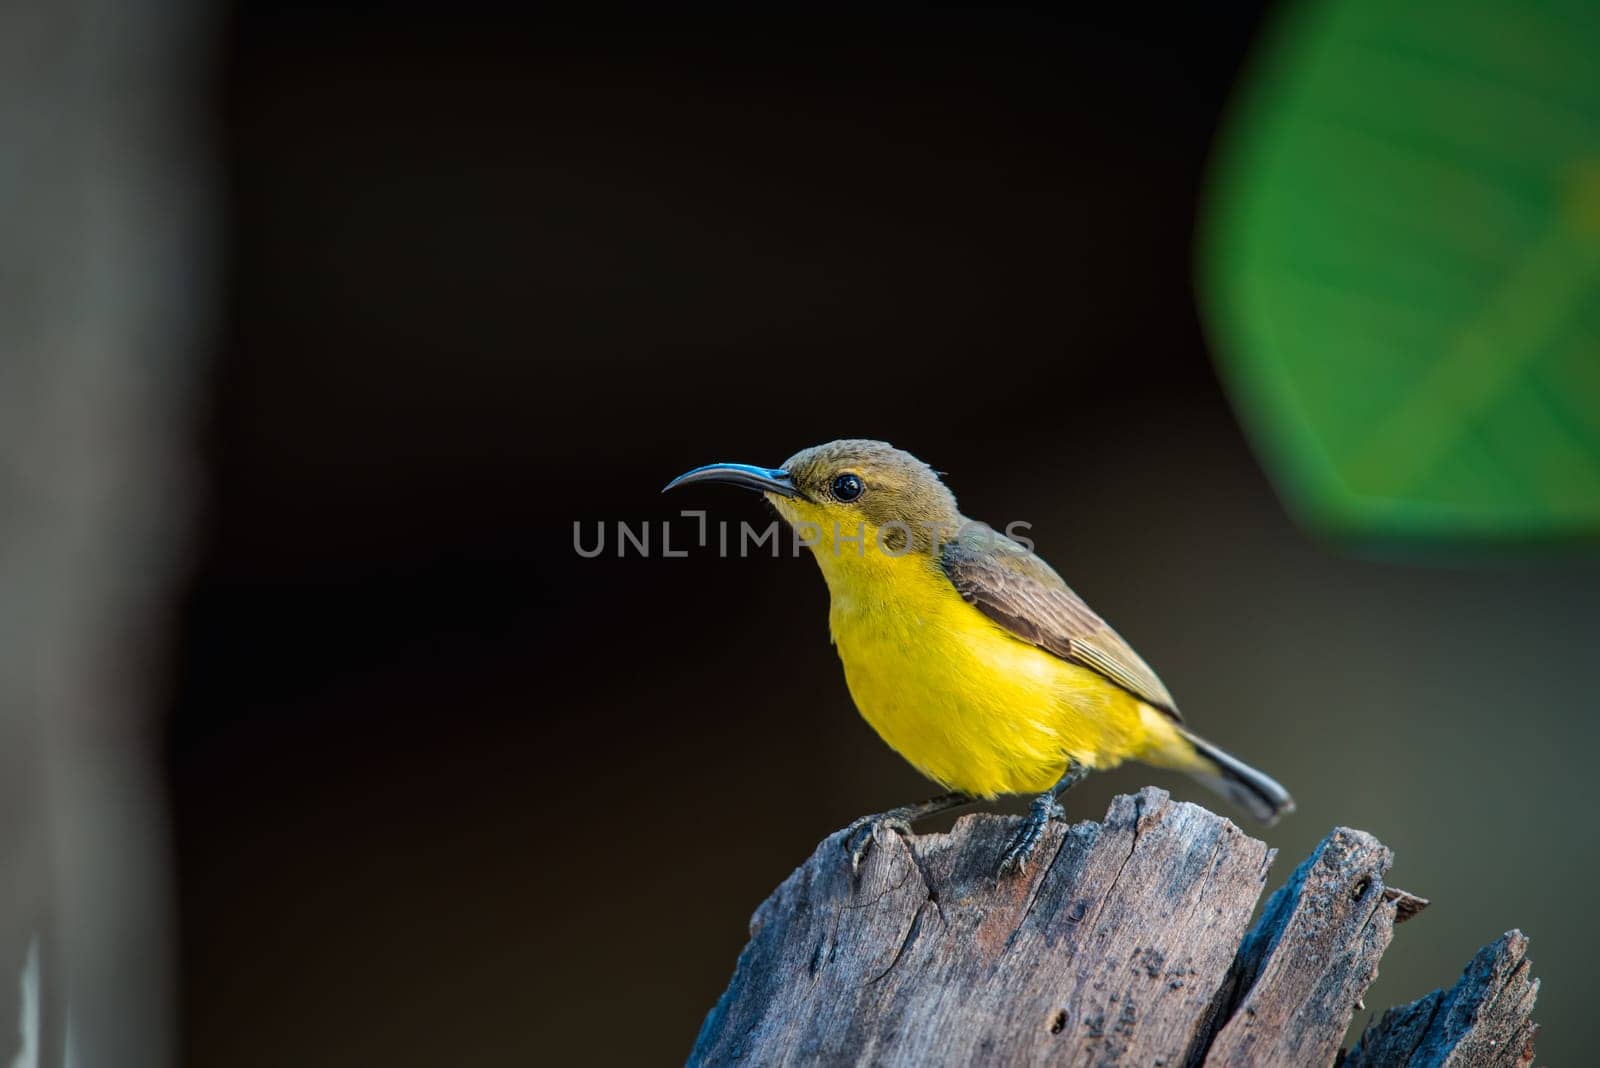 Bird (Olive-backed sunbird) on tree in nature wild by PongMoji